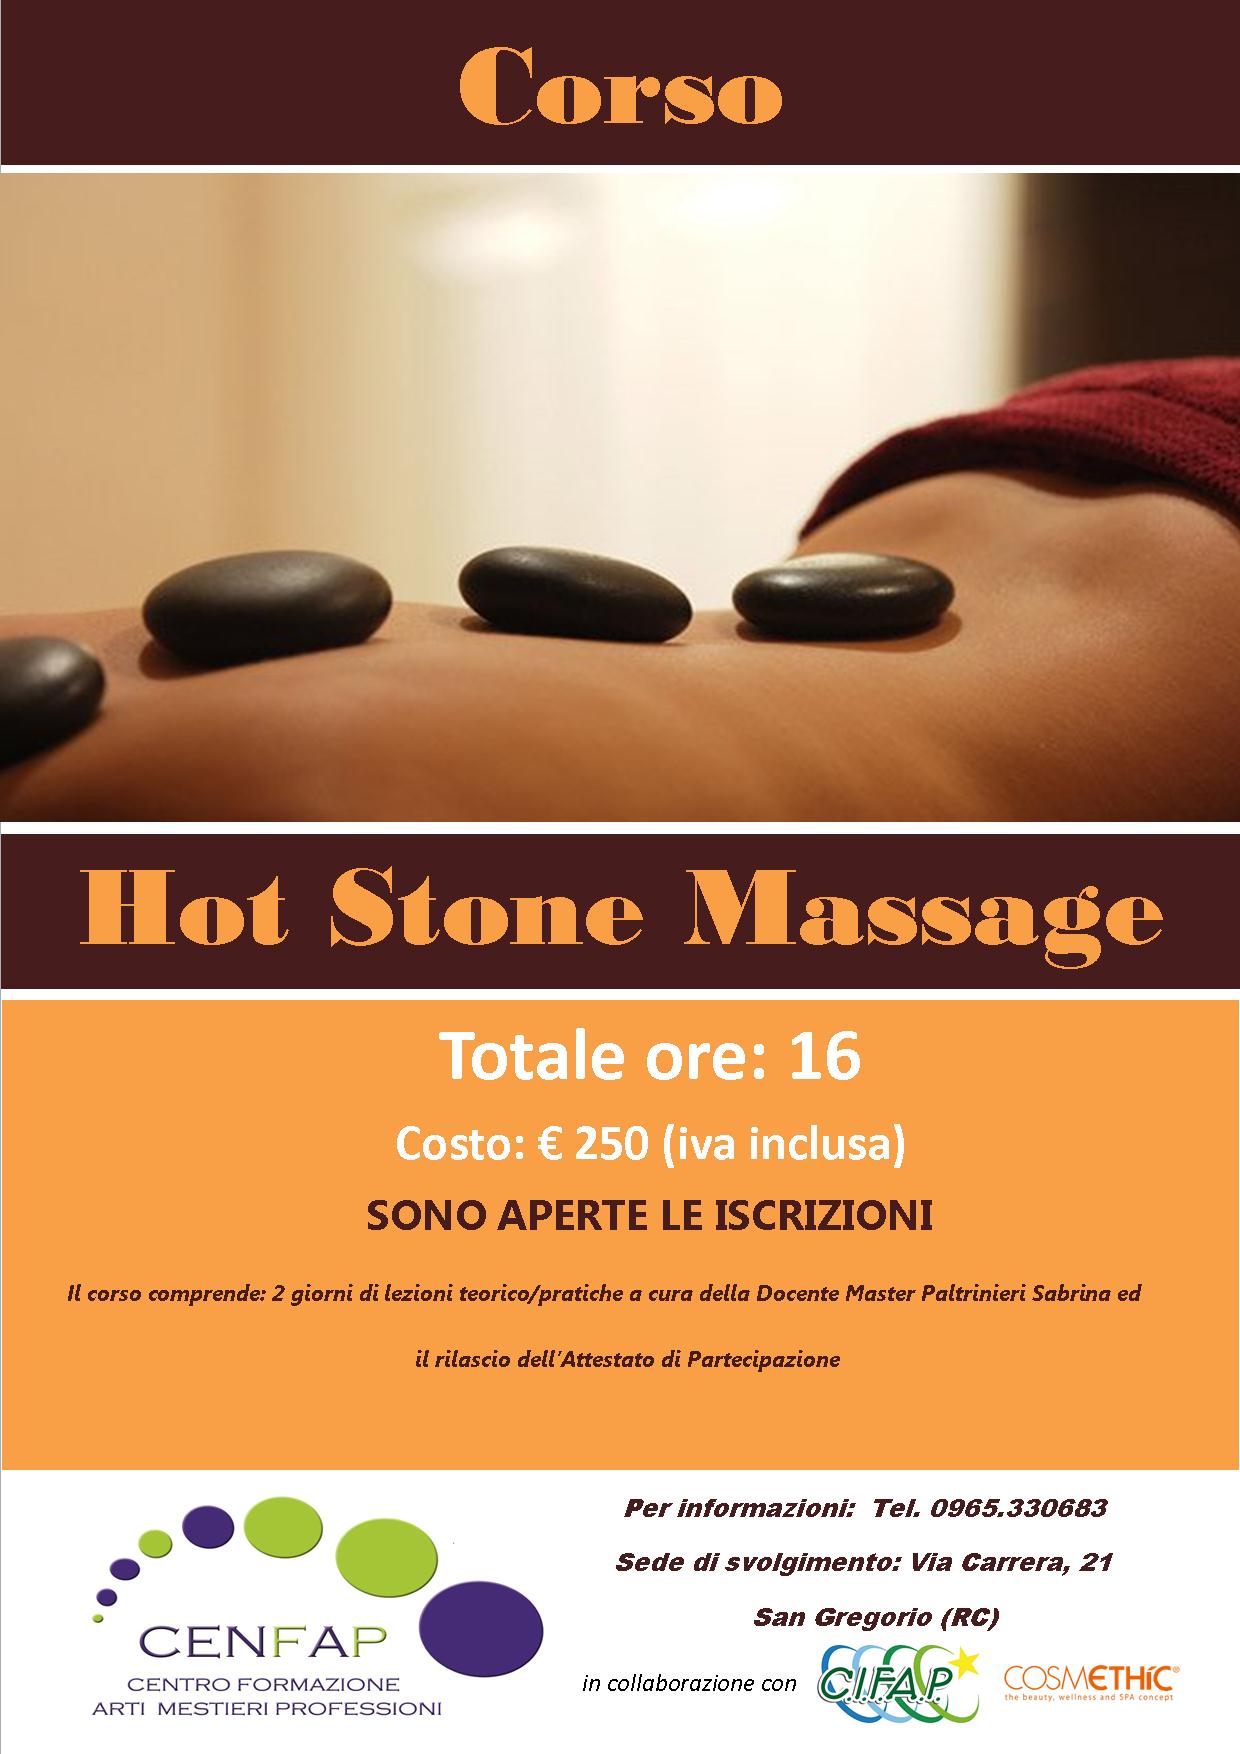 Corso Hot Stone Massage